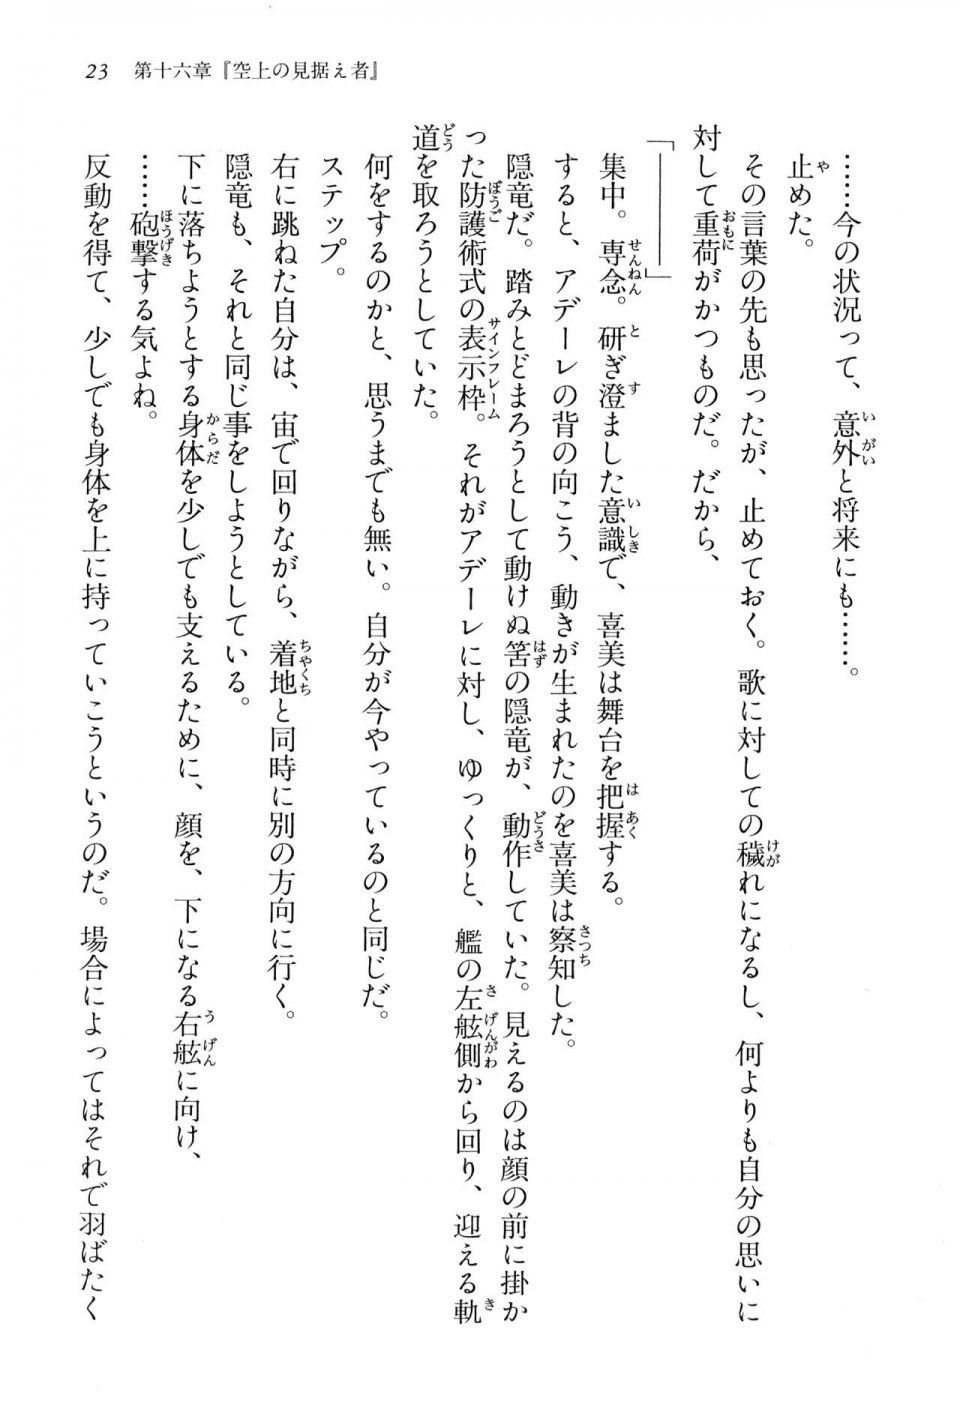 Kyoukai Senjou no Horizon BD Special Mininovel Vol 4(2B) - Photo #27